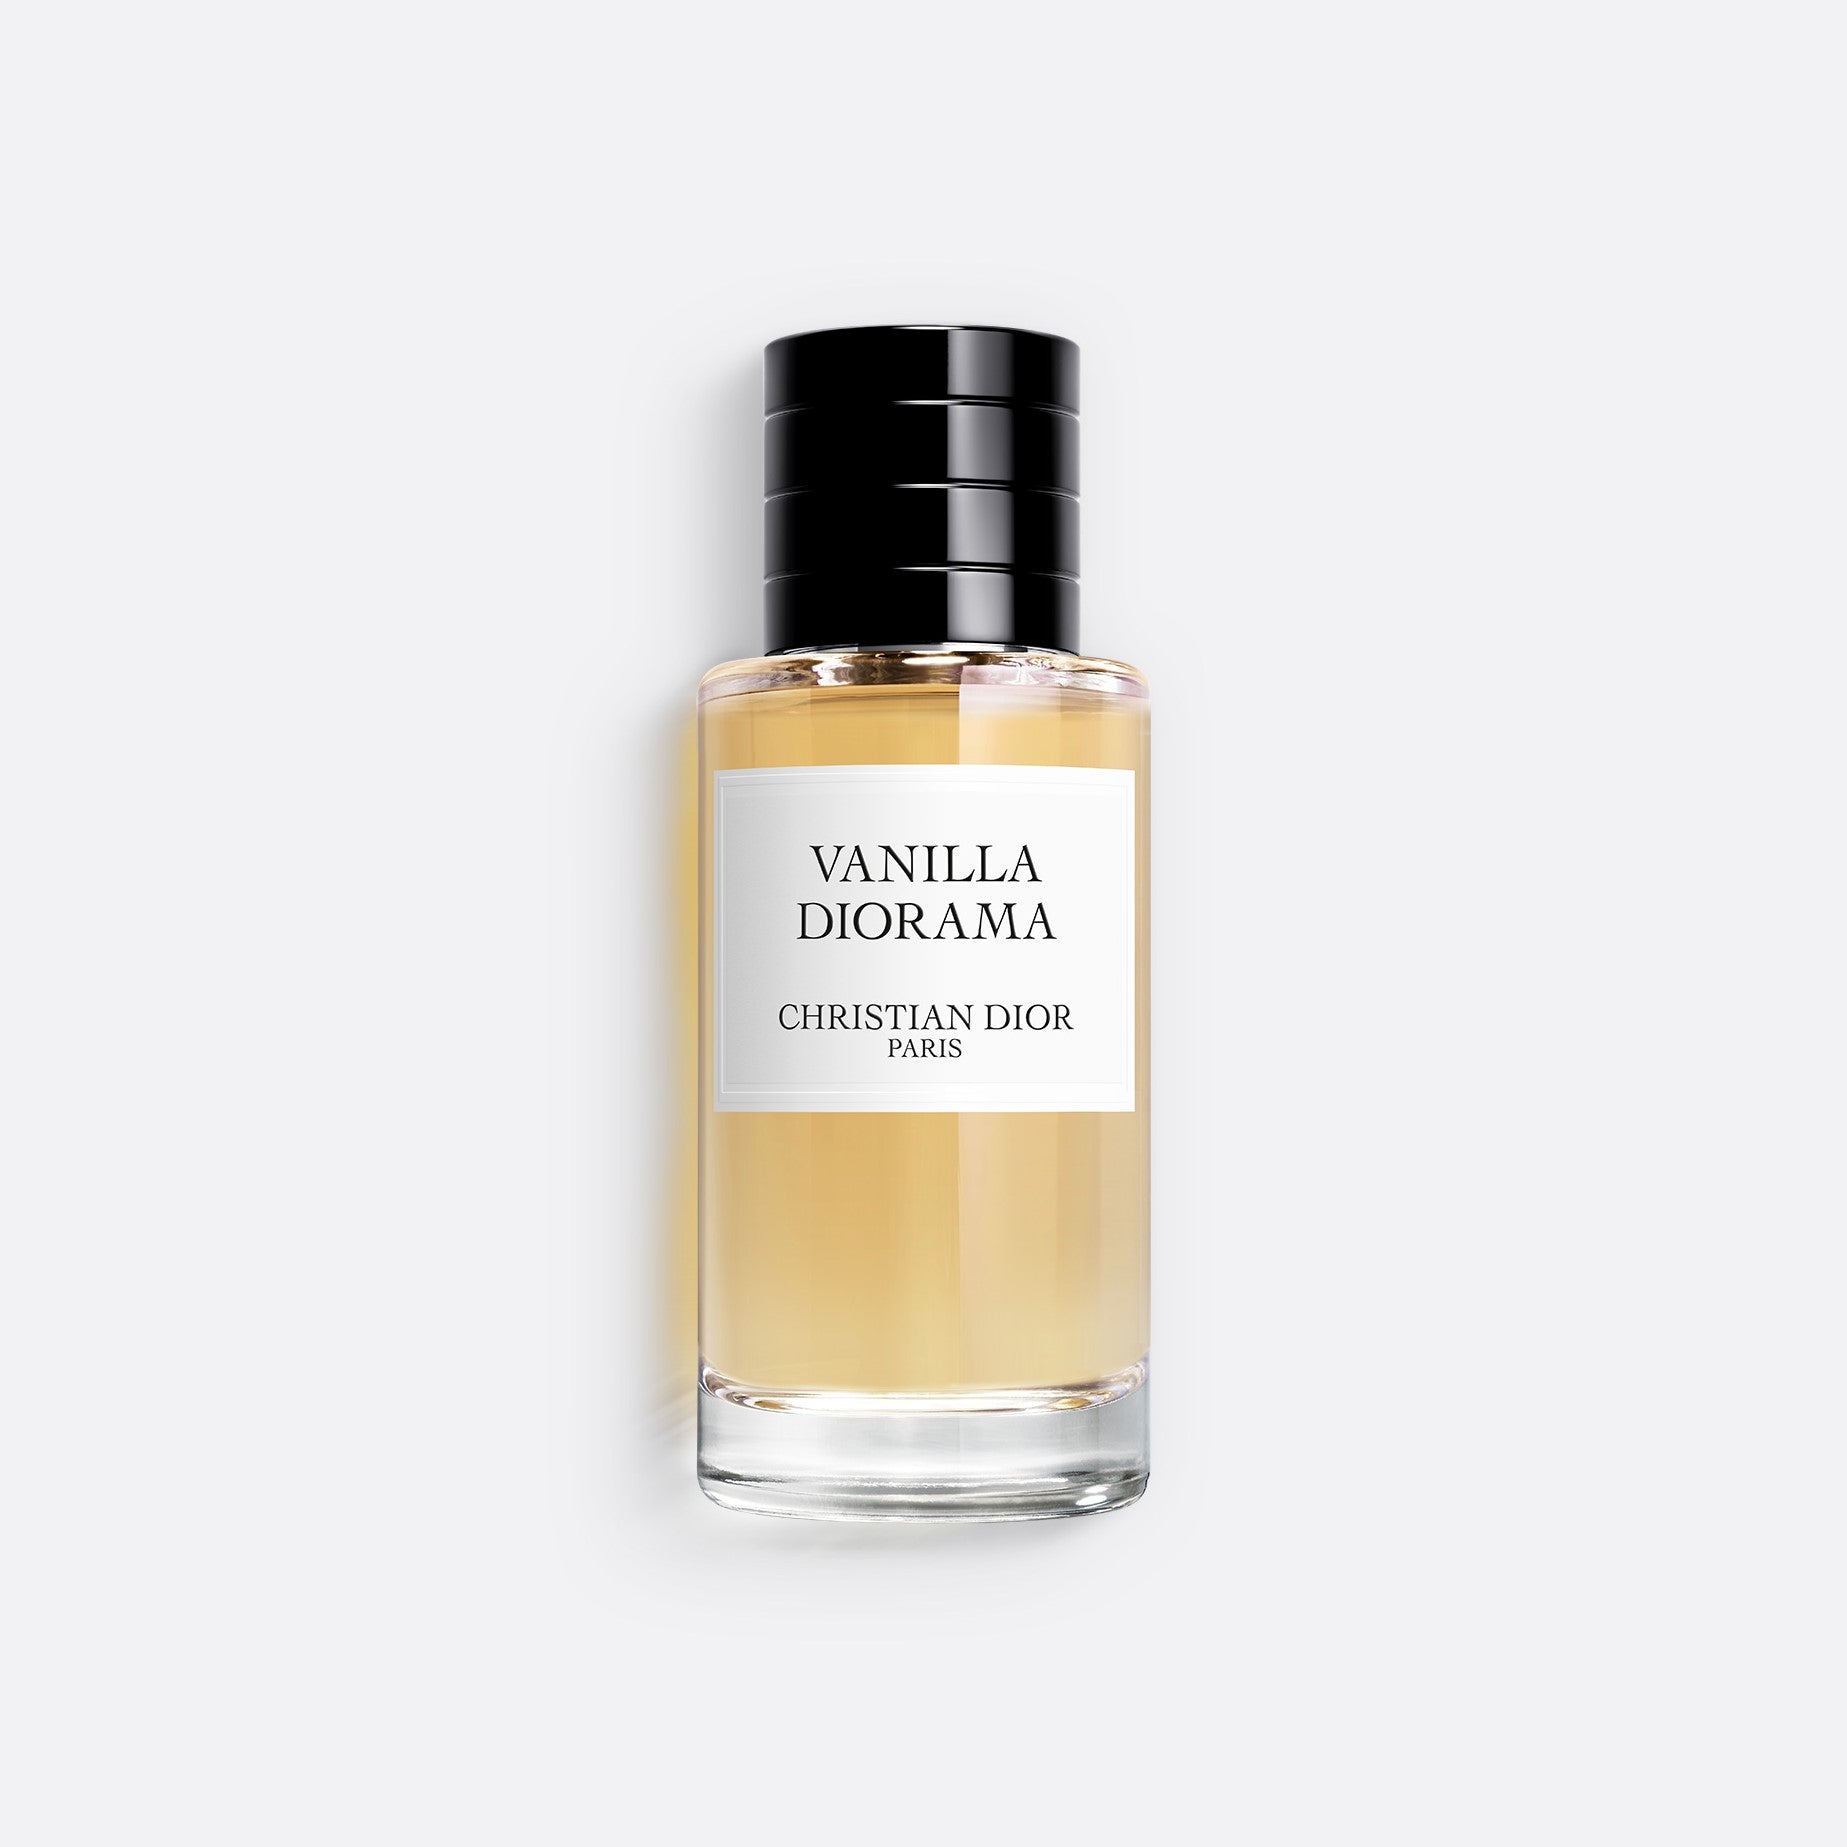 VANILLA DIORAMA ~ Fragrance